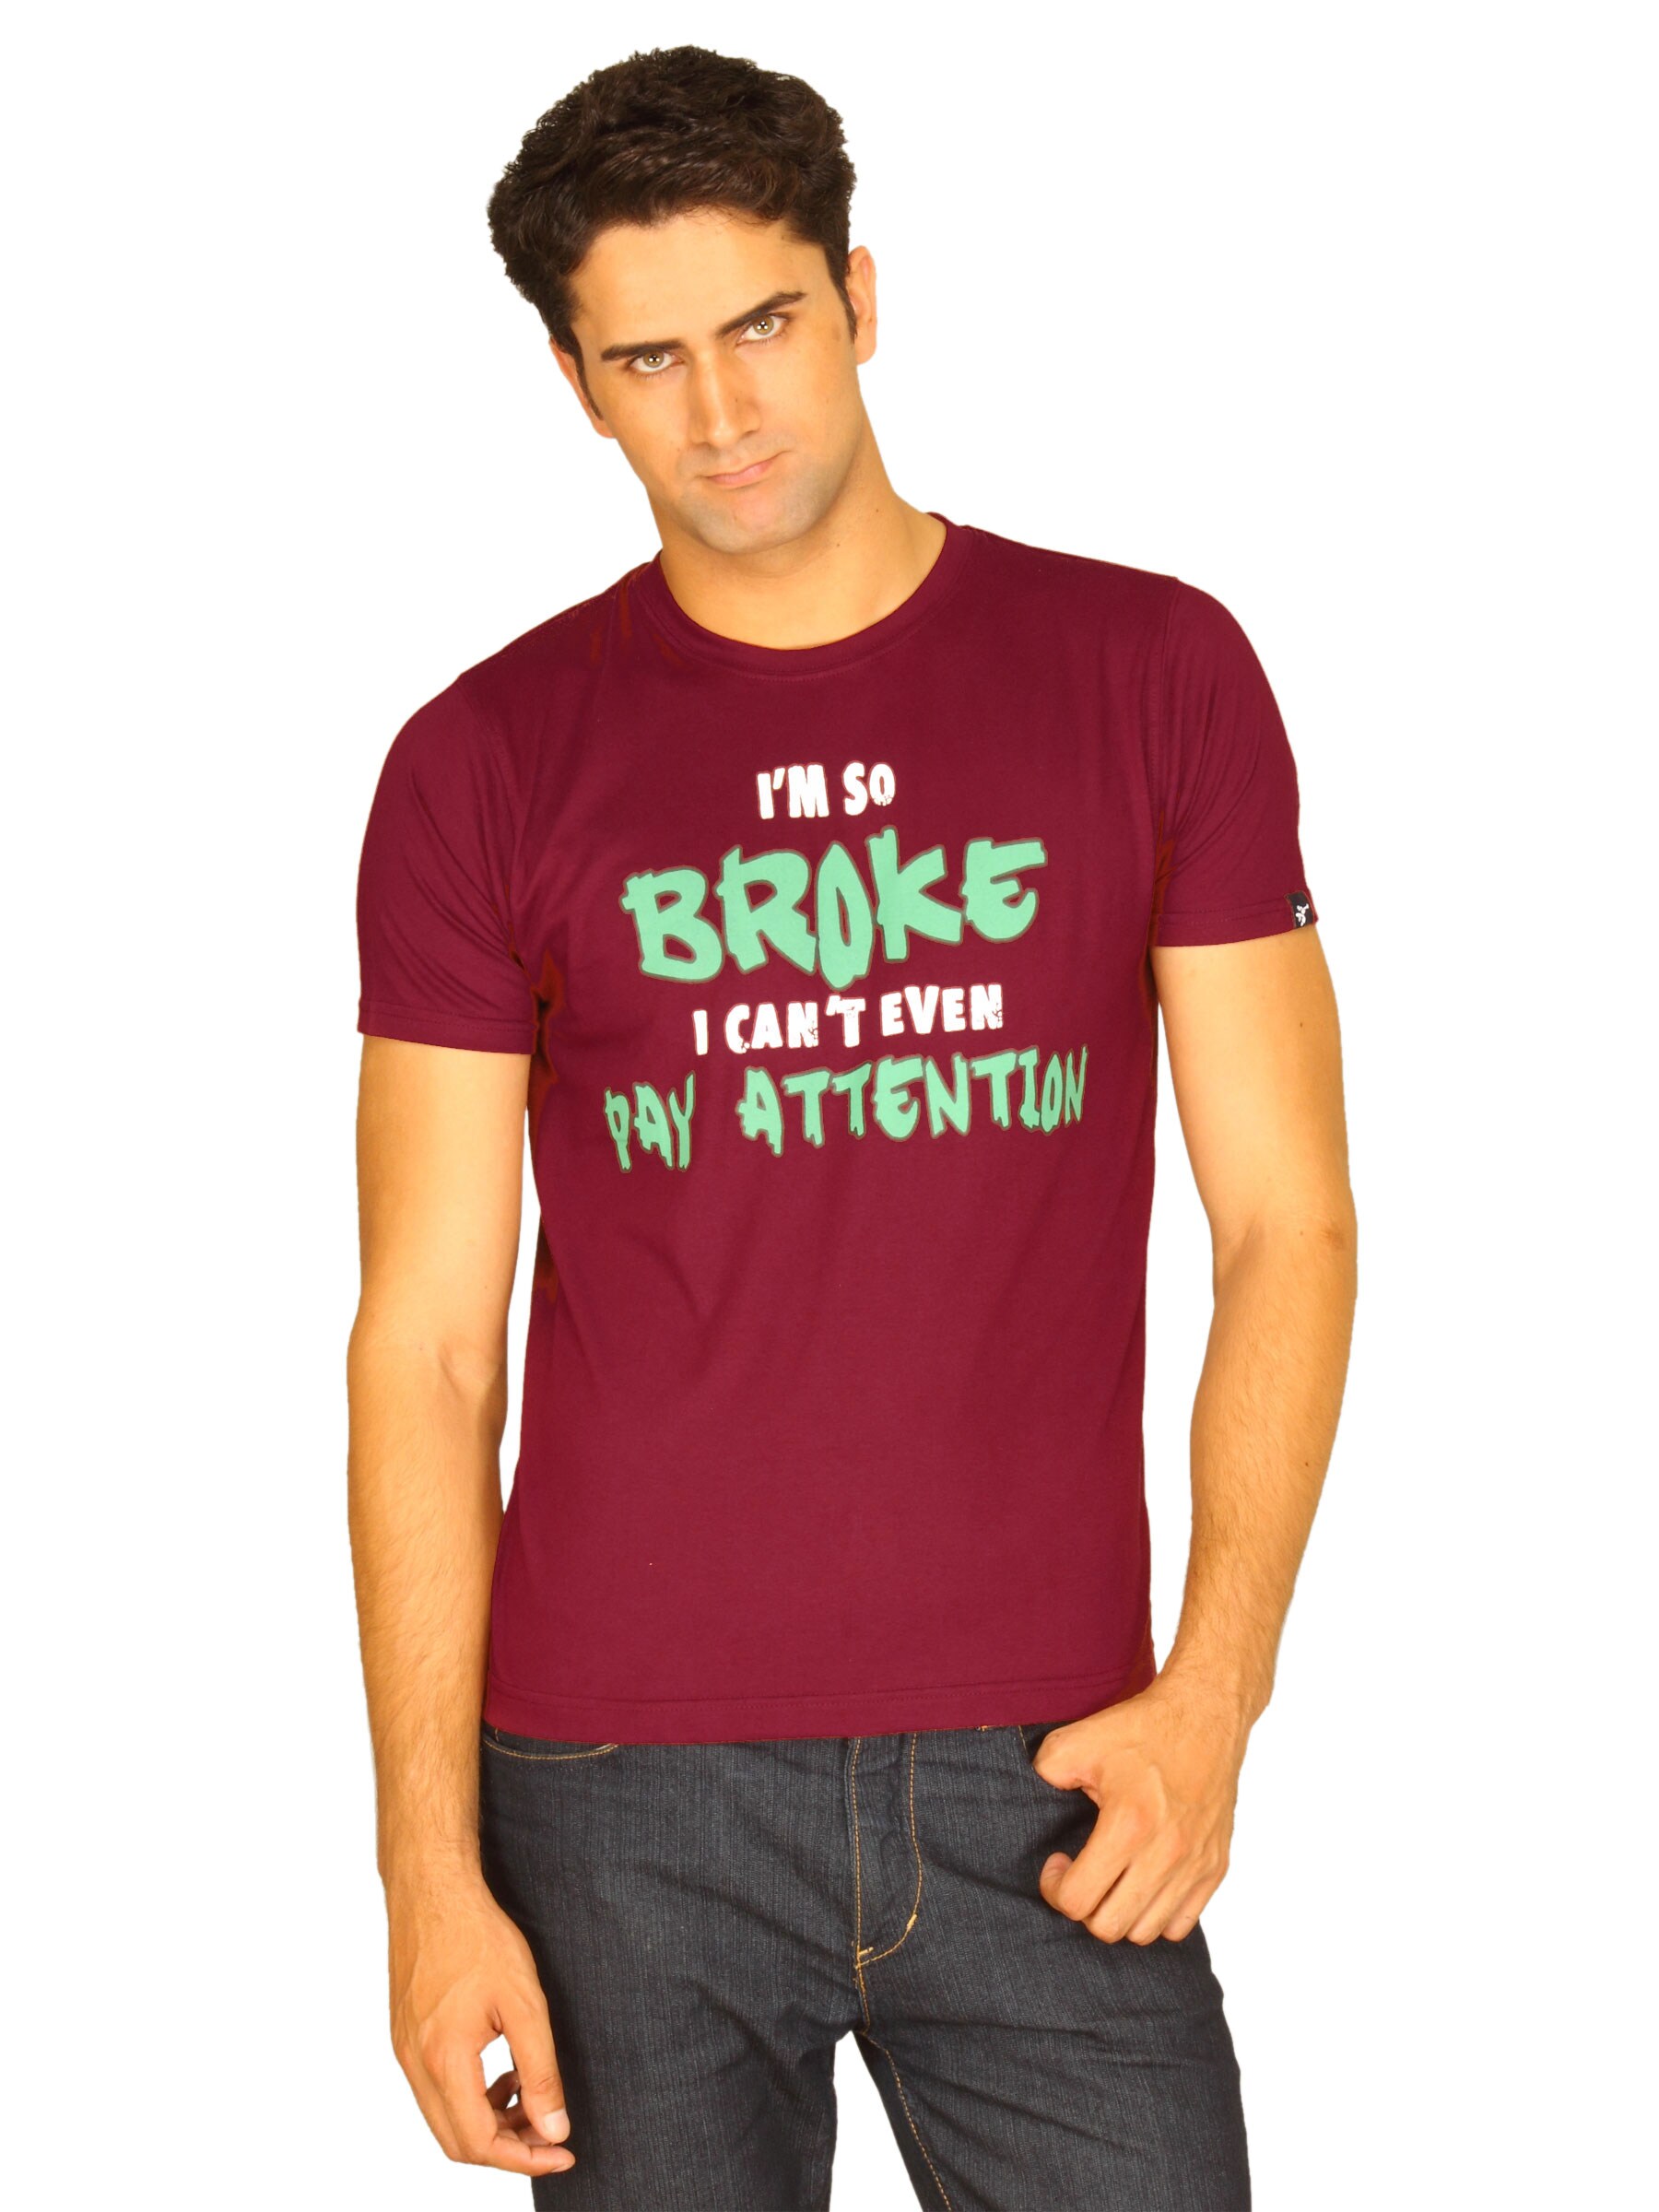 Probase Men's I'M So Broke Maroon T-shirt